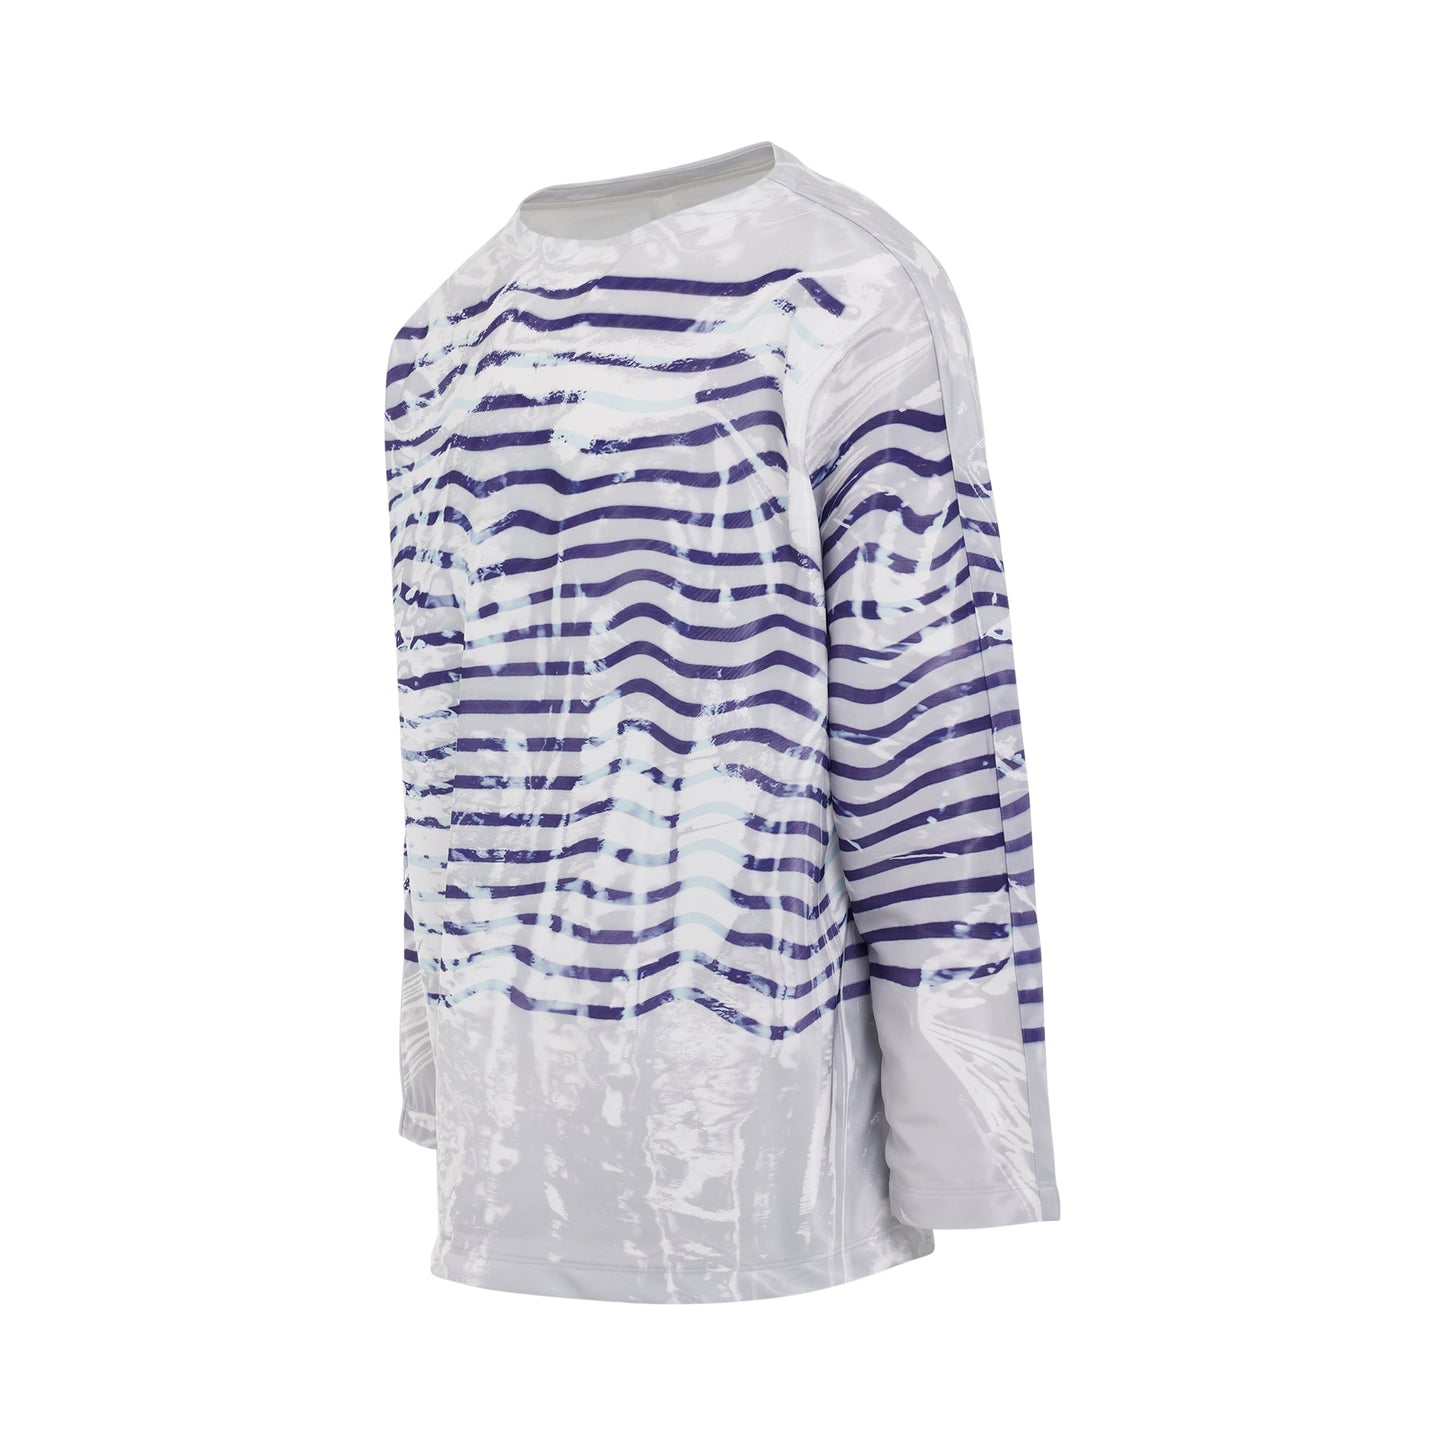 Mirage Printed Basque Shirt in White/Blue